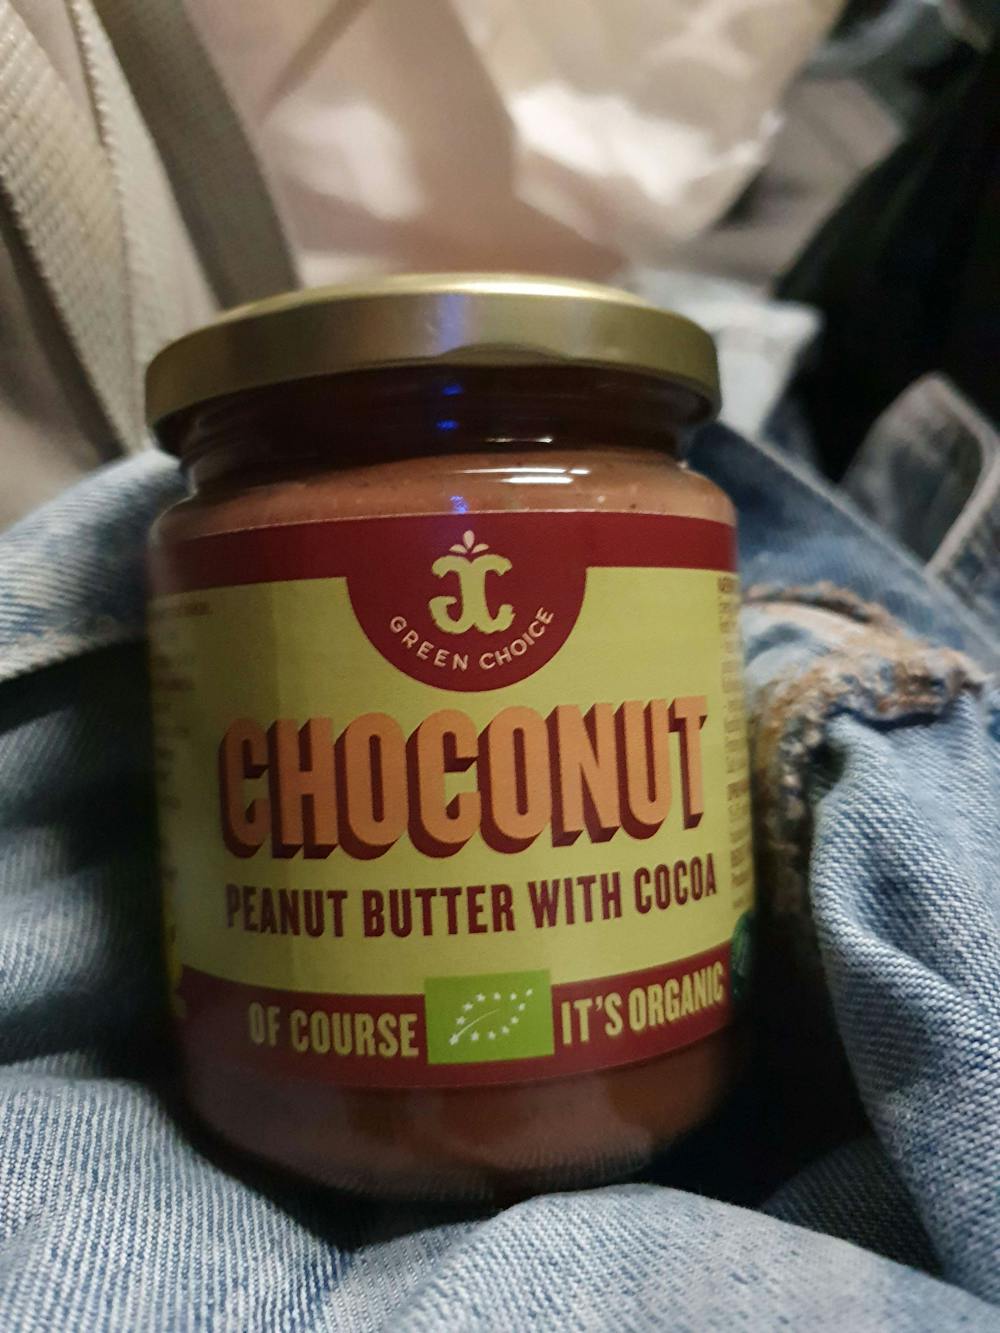 Choconut, Green Choice